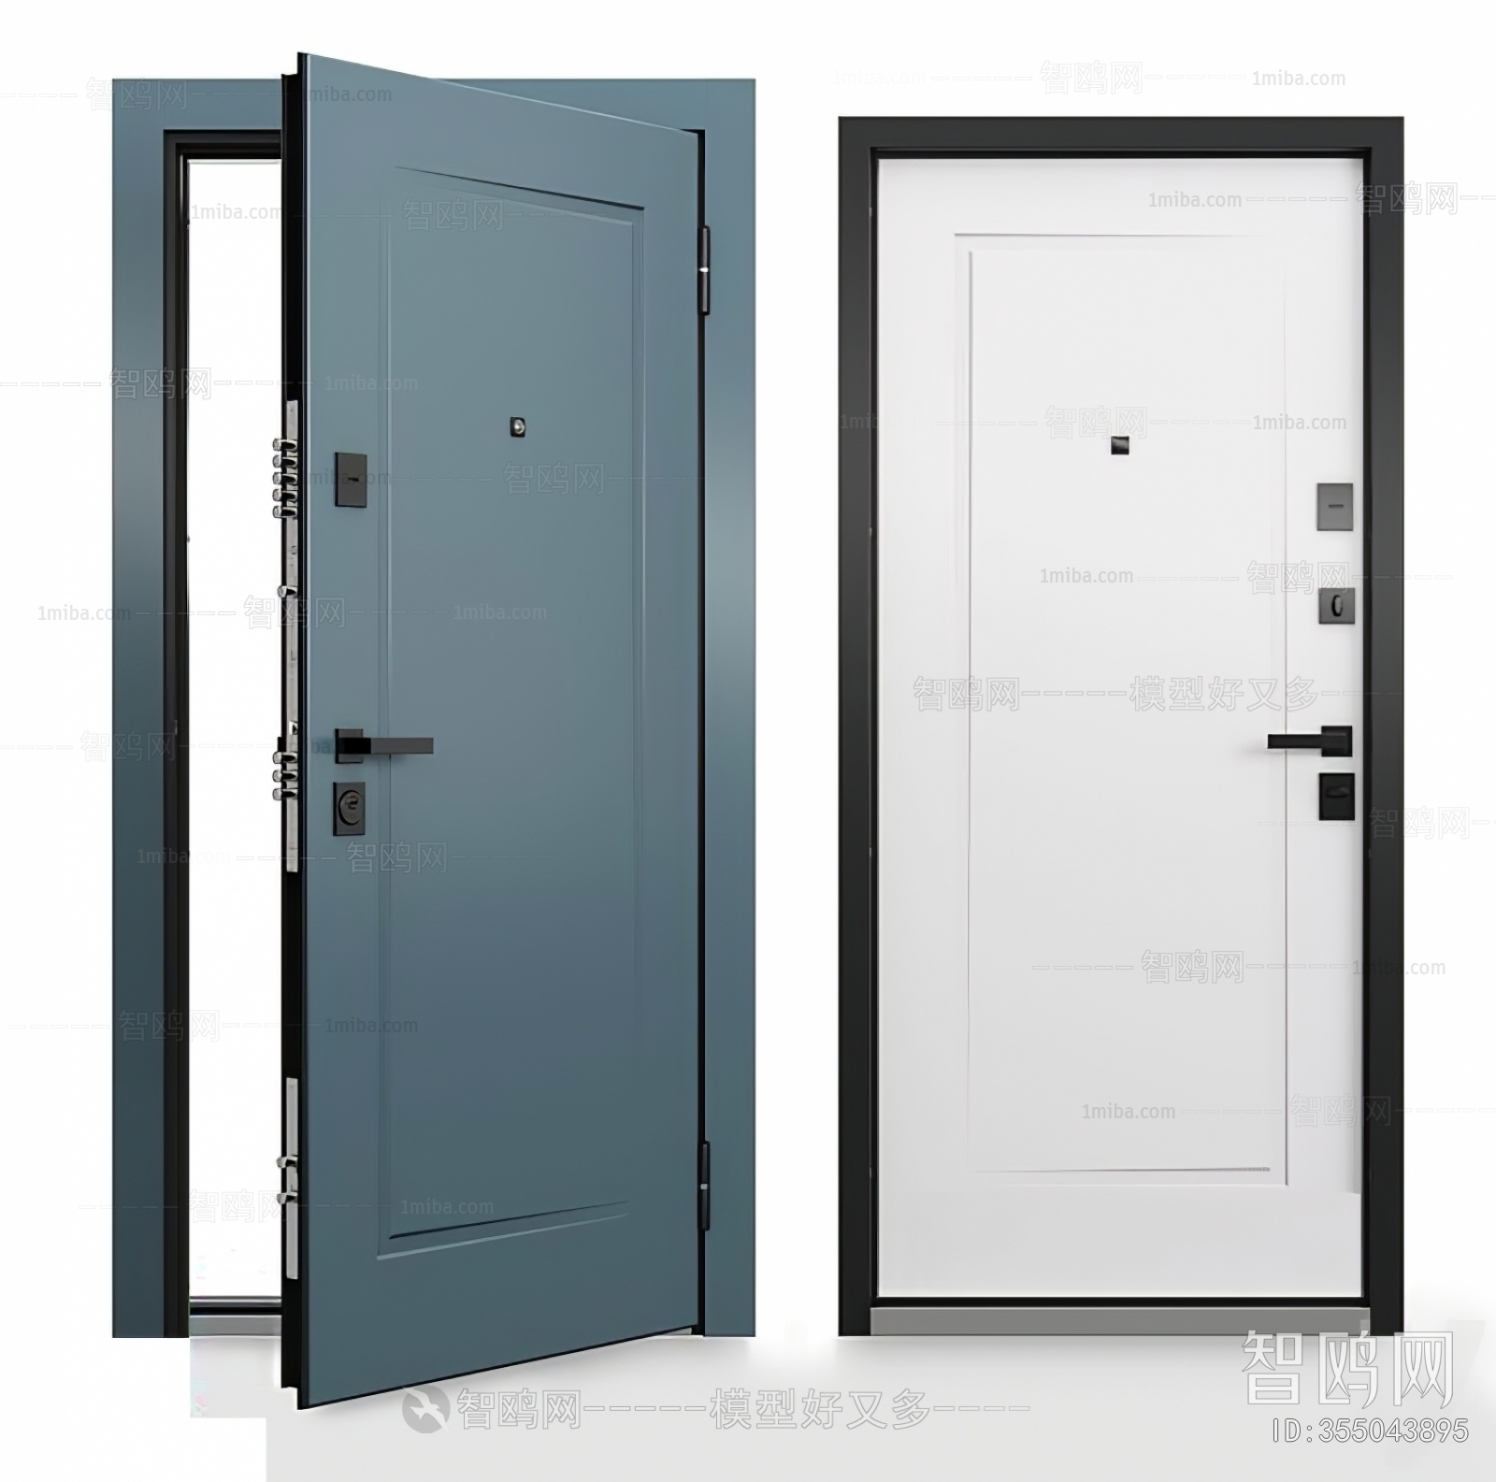 Modern Industrial Style Single Door